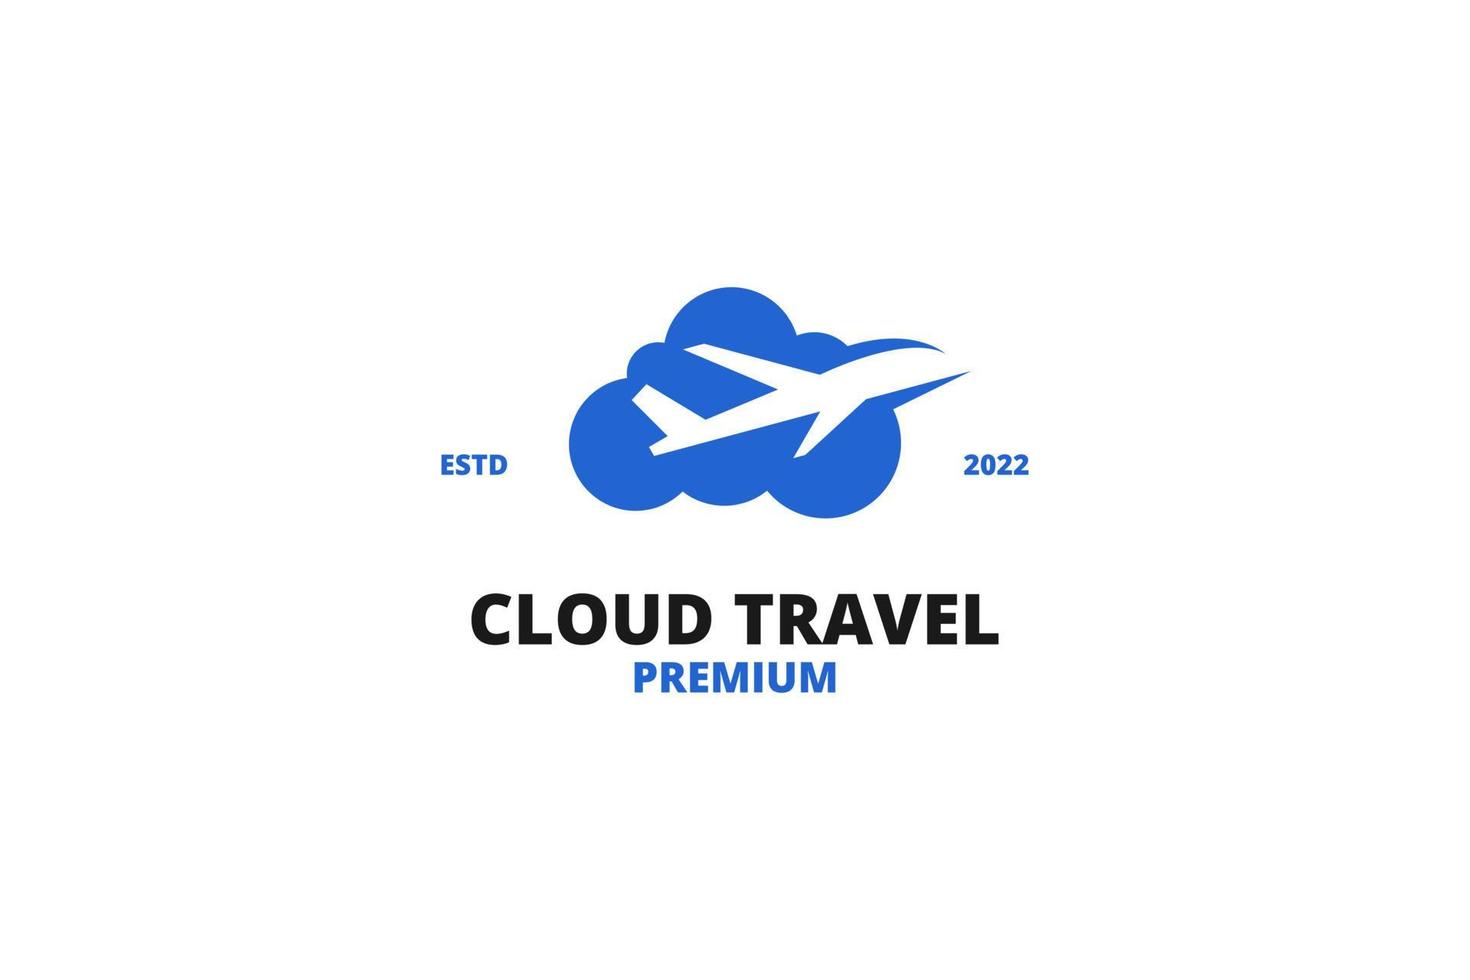 Cloud travel logo with plane icon design vector